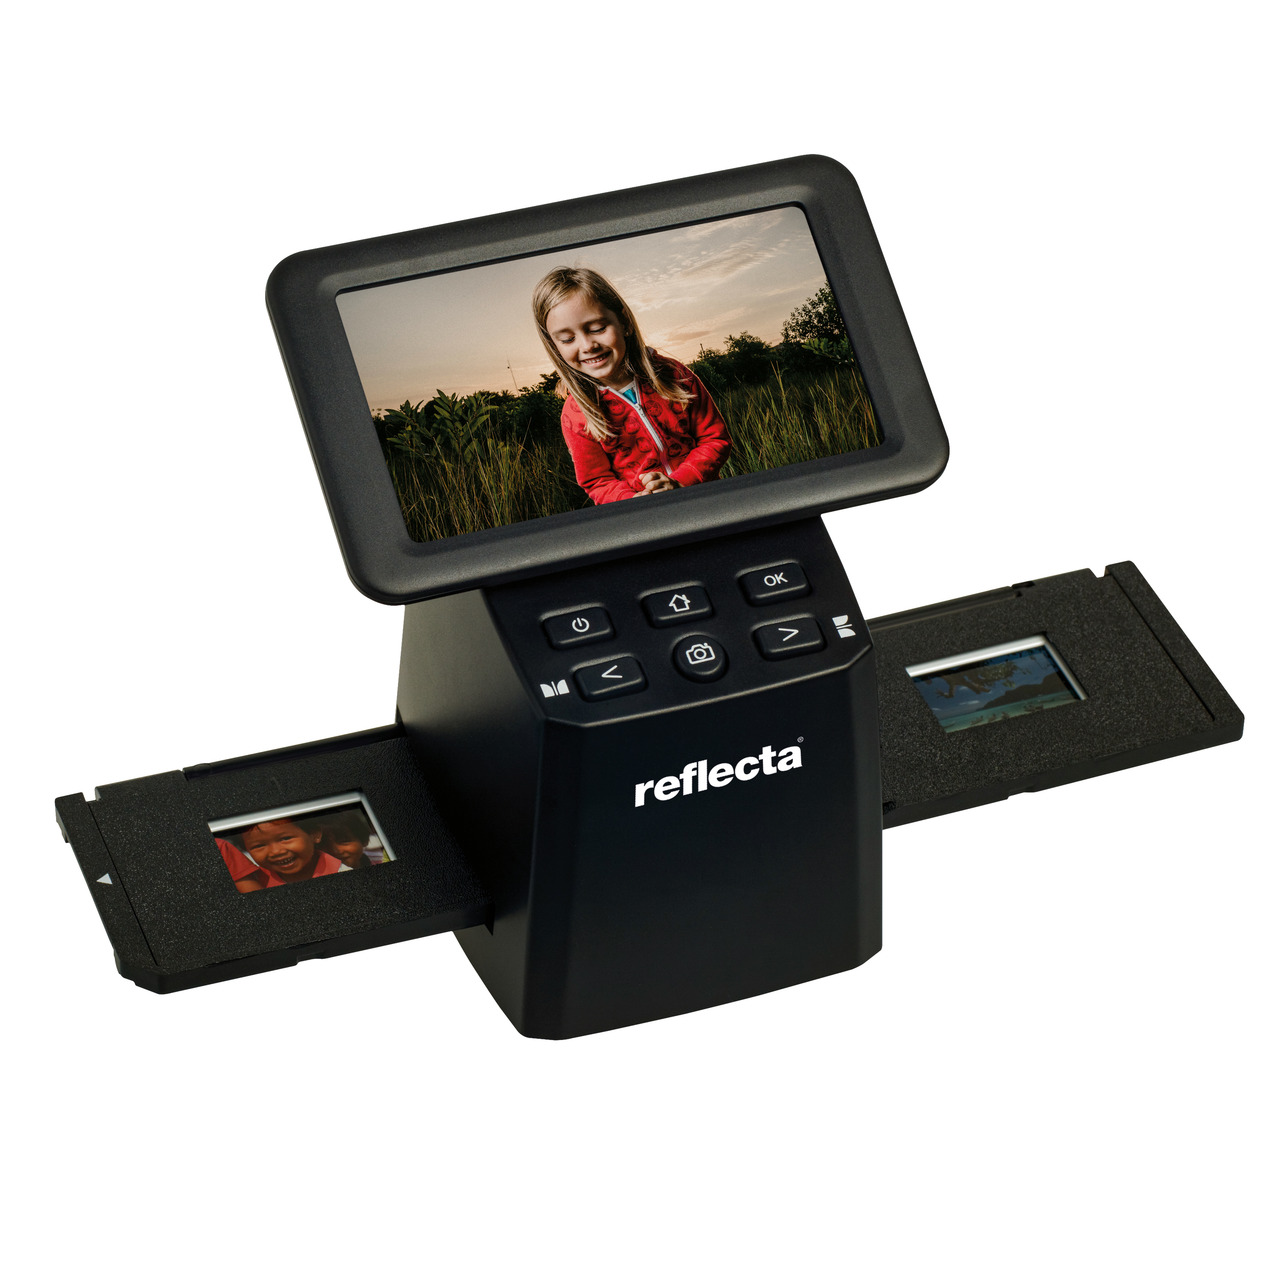 reflecta Dia-Negativscanner x33-Scan- 15-3 Megapixel- IPS-Display 12-7 cm (5)- RGB-Farbanpassung unter Multimedia